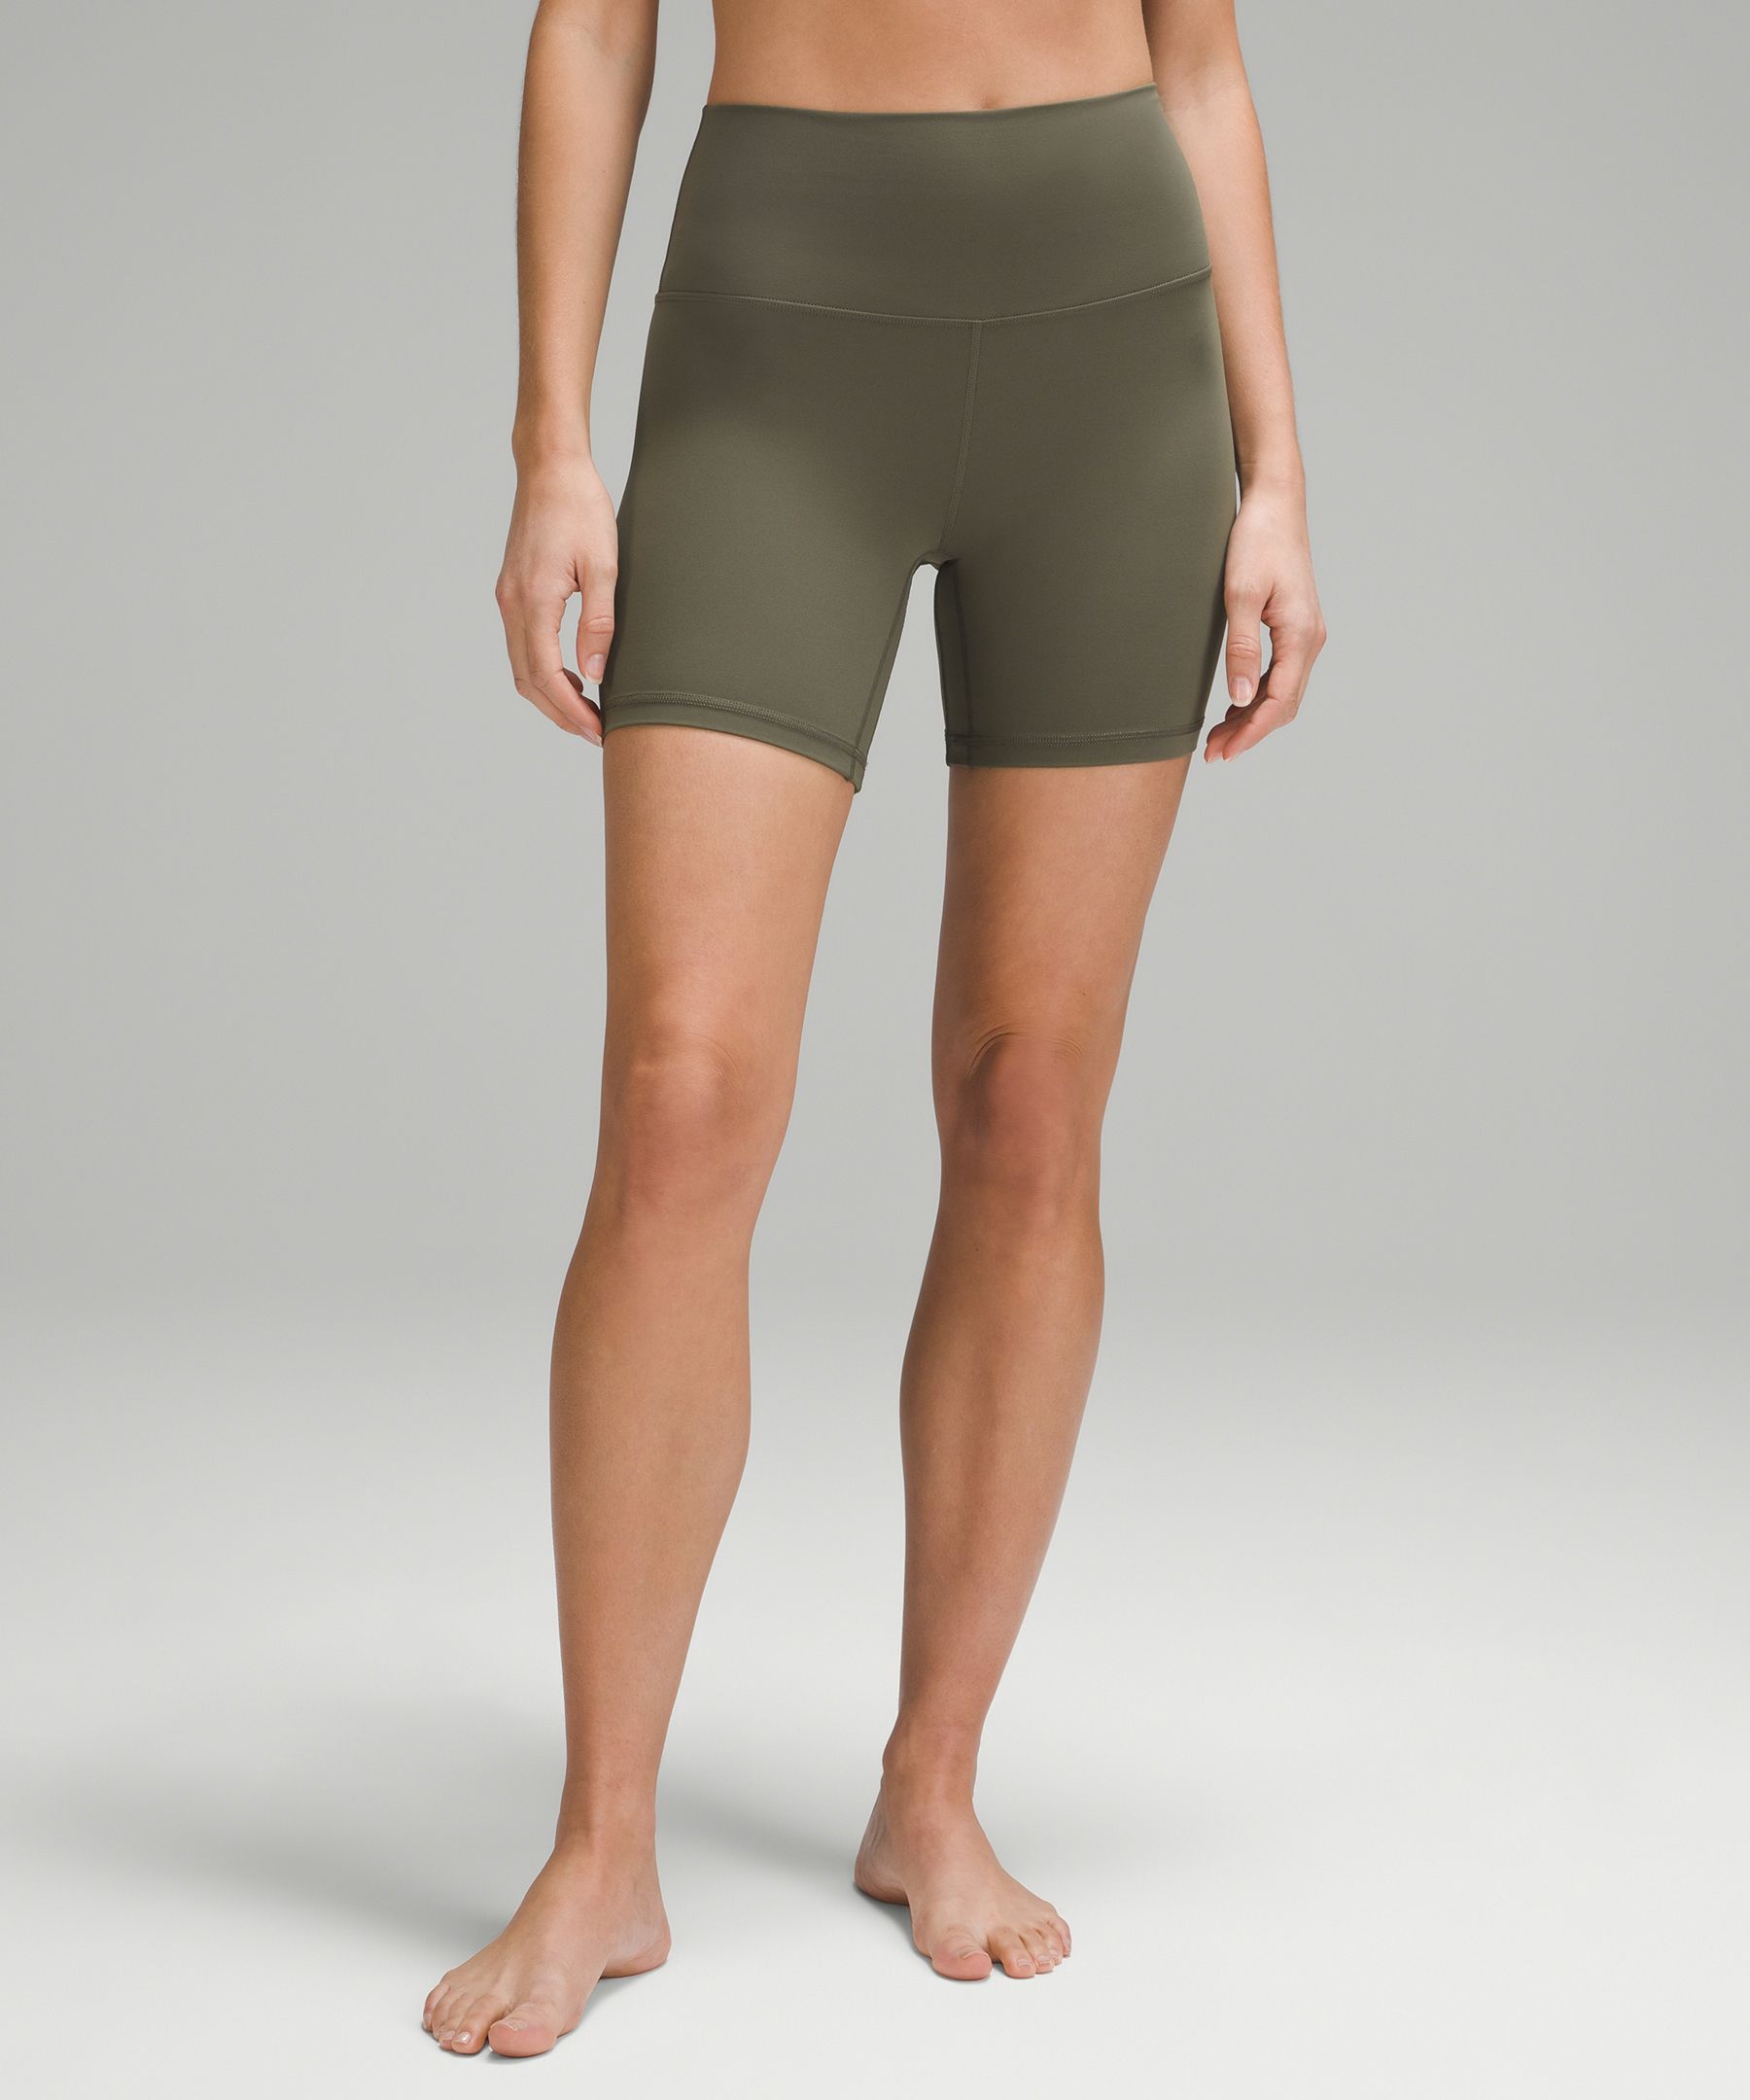 Lululemon Align™ High-rise Shorts 6"